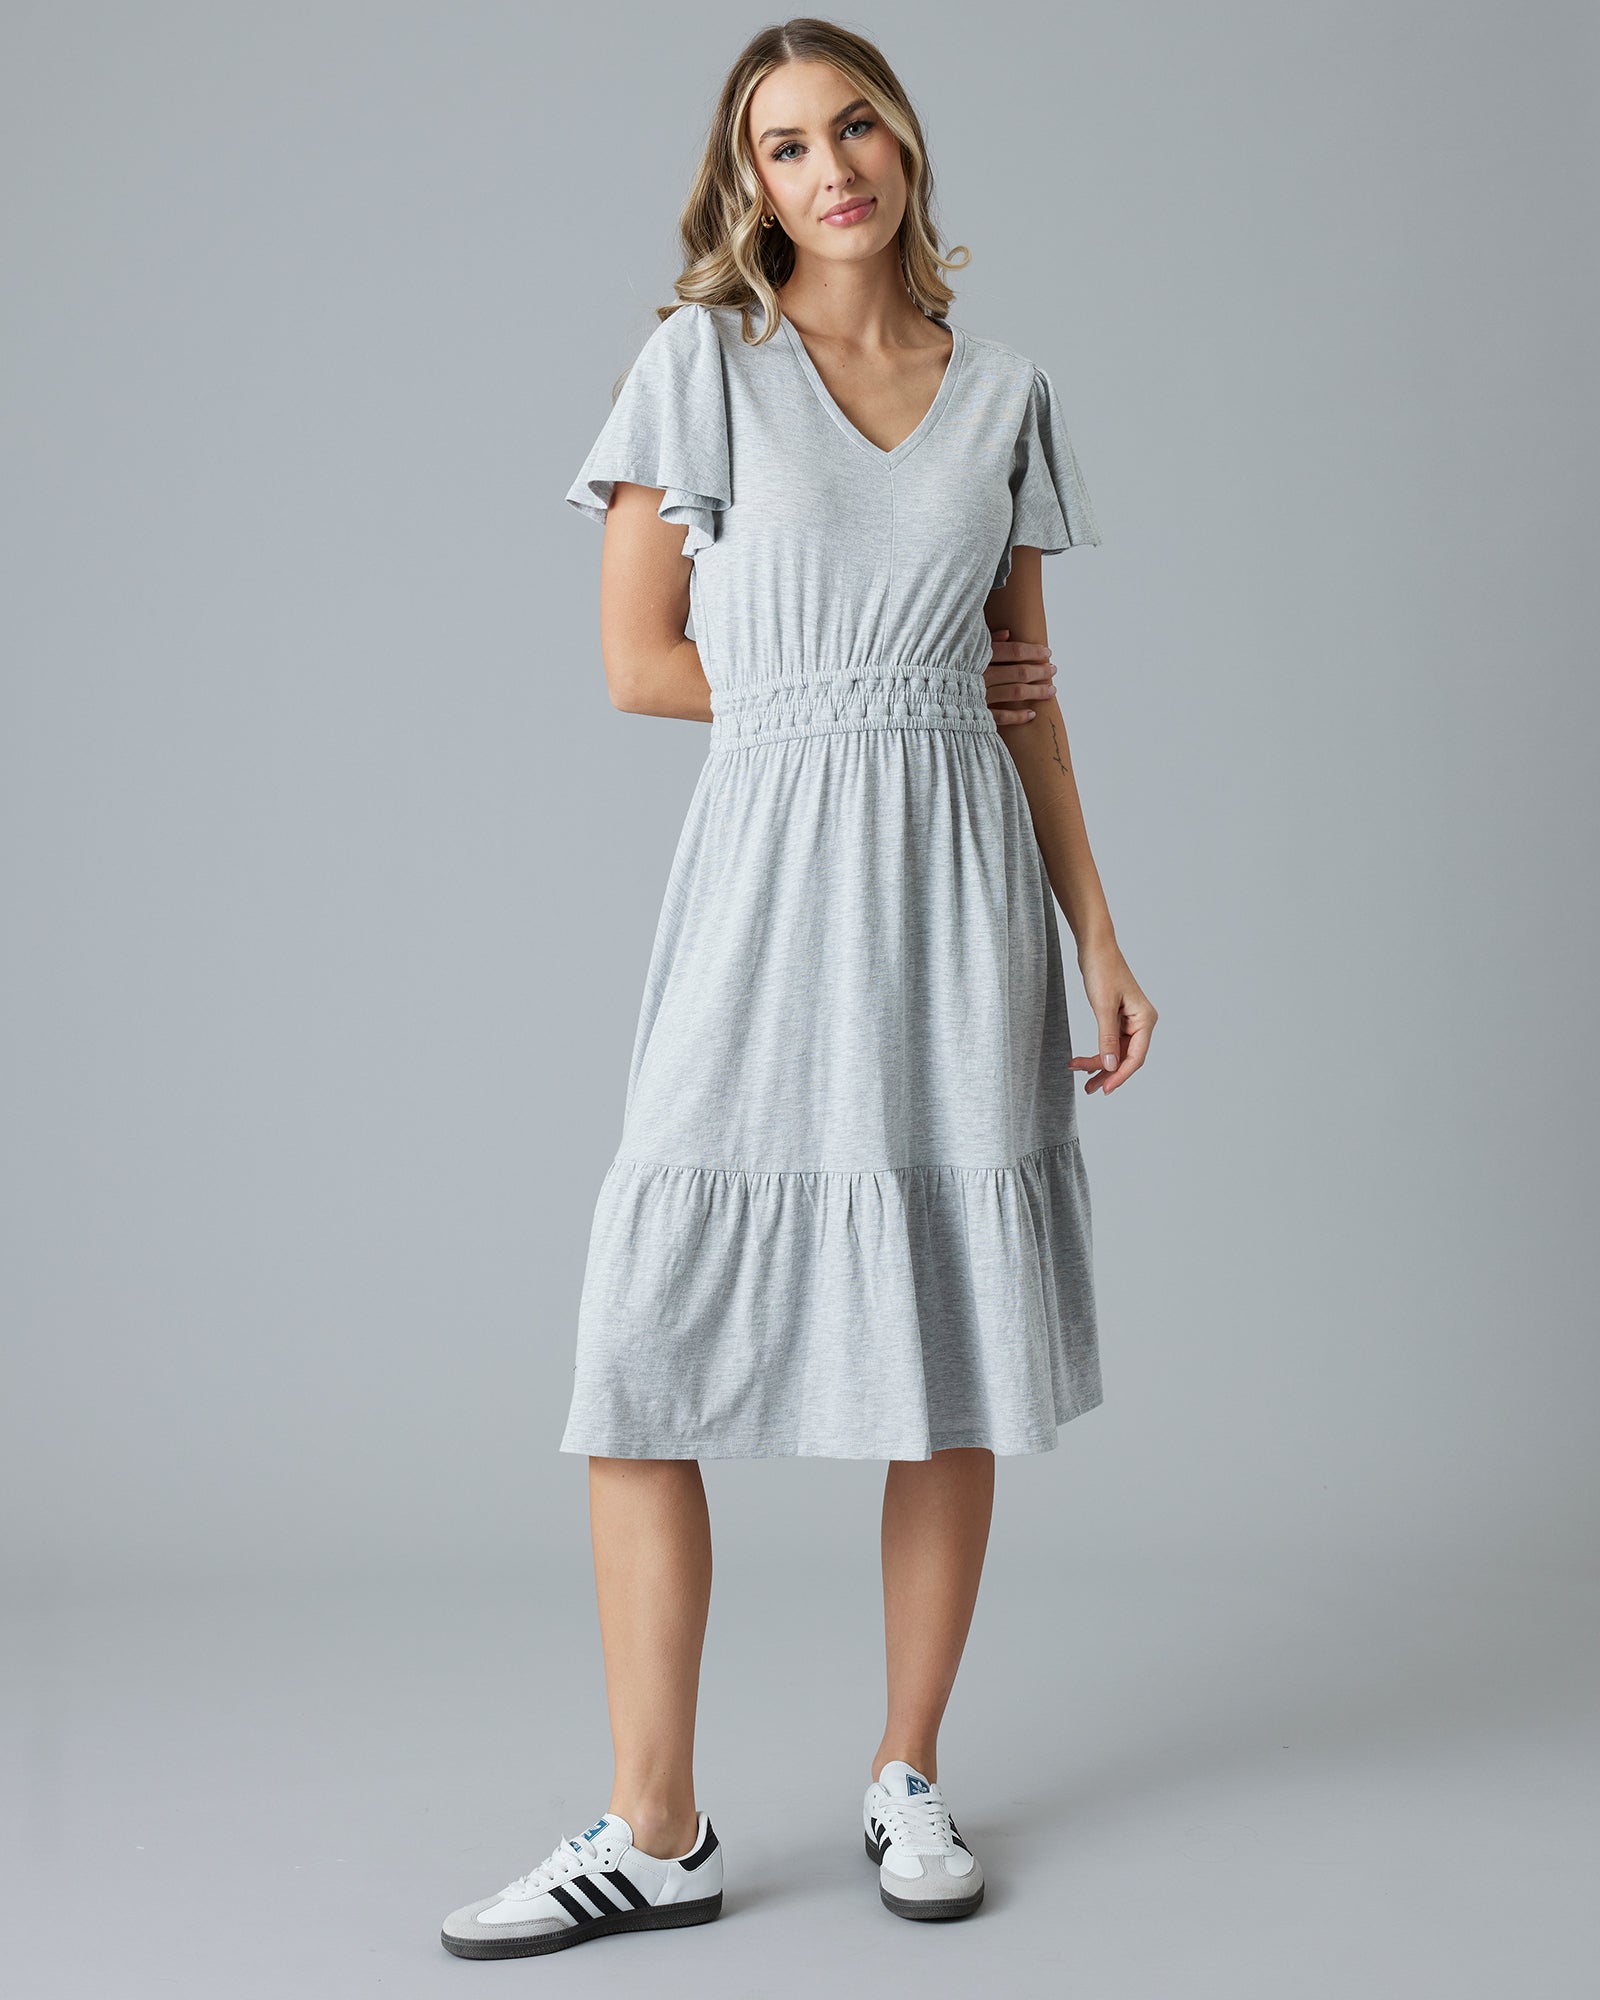 Woman in a grey short sleeve midi dress